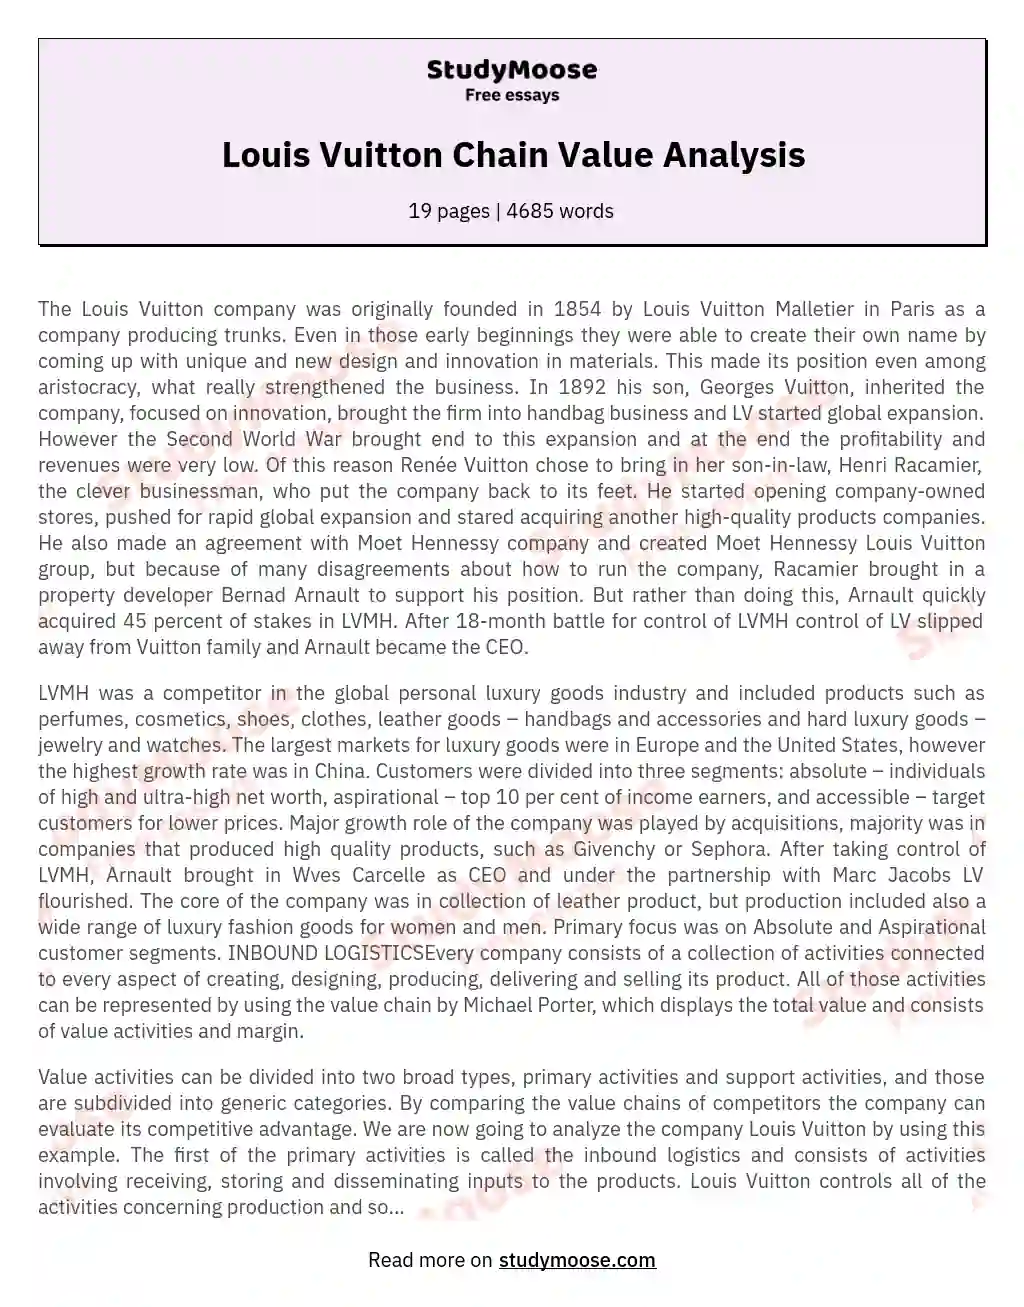 Louis Vuitton Chain Value Analysis essay